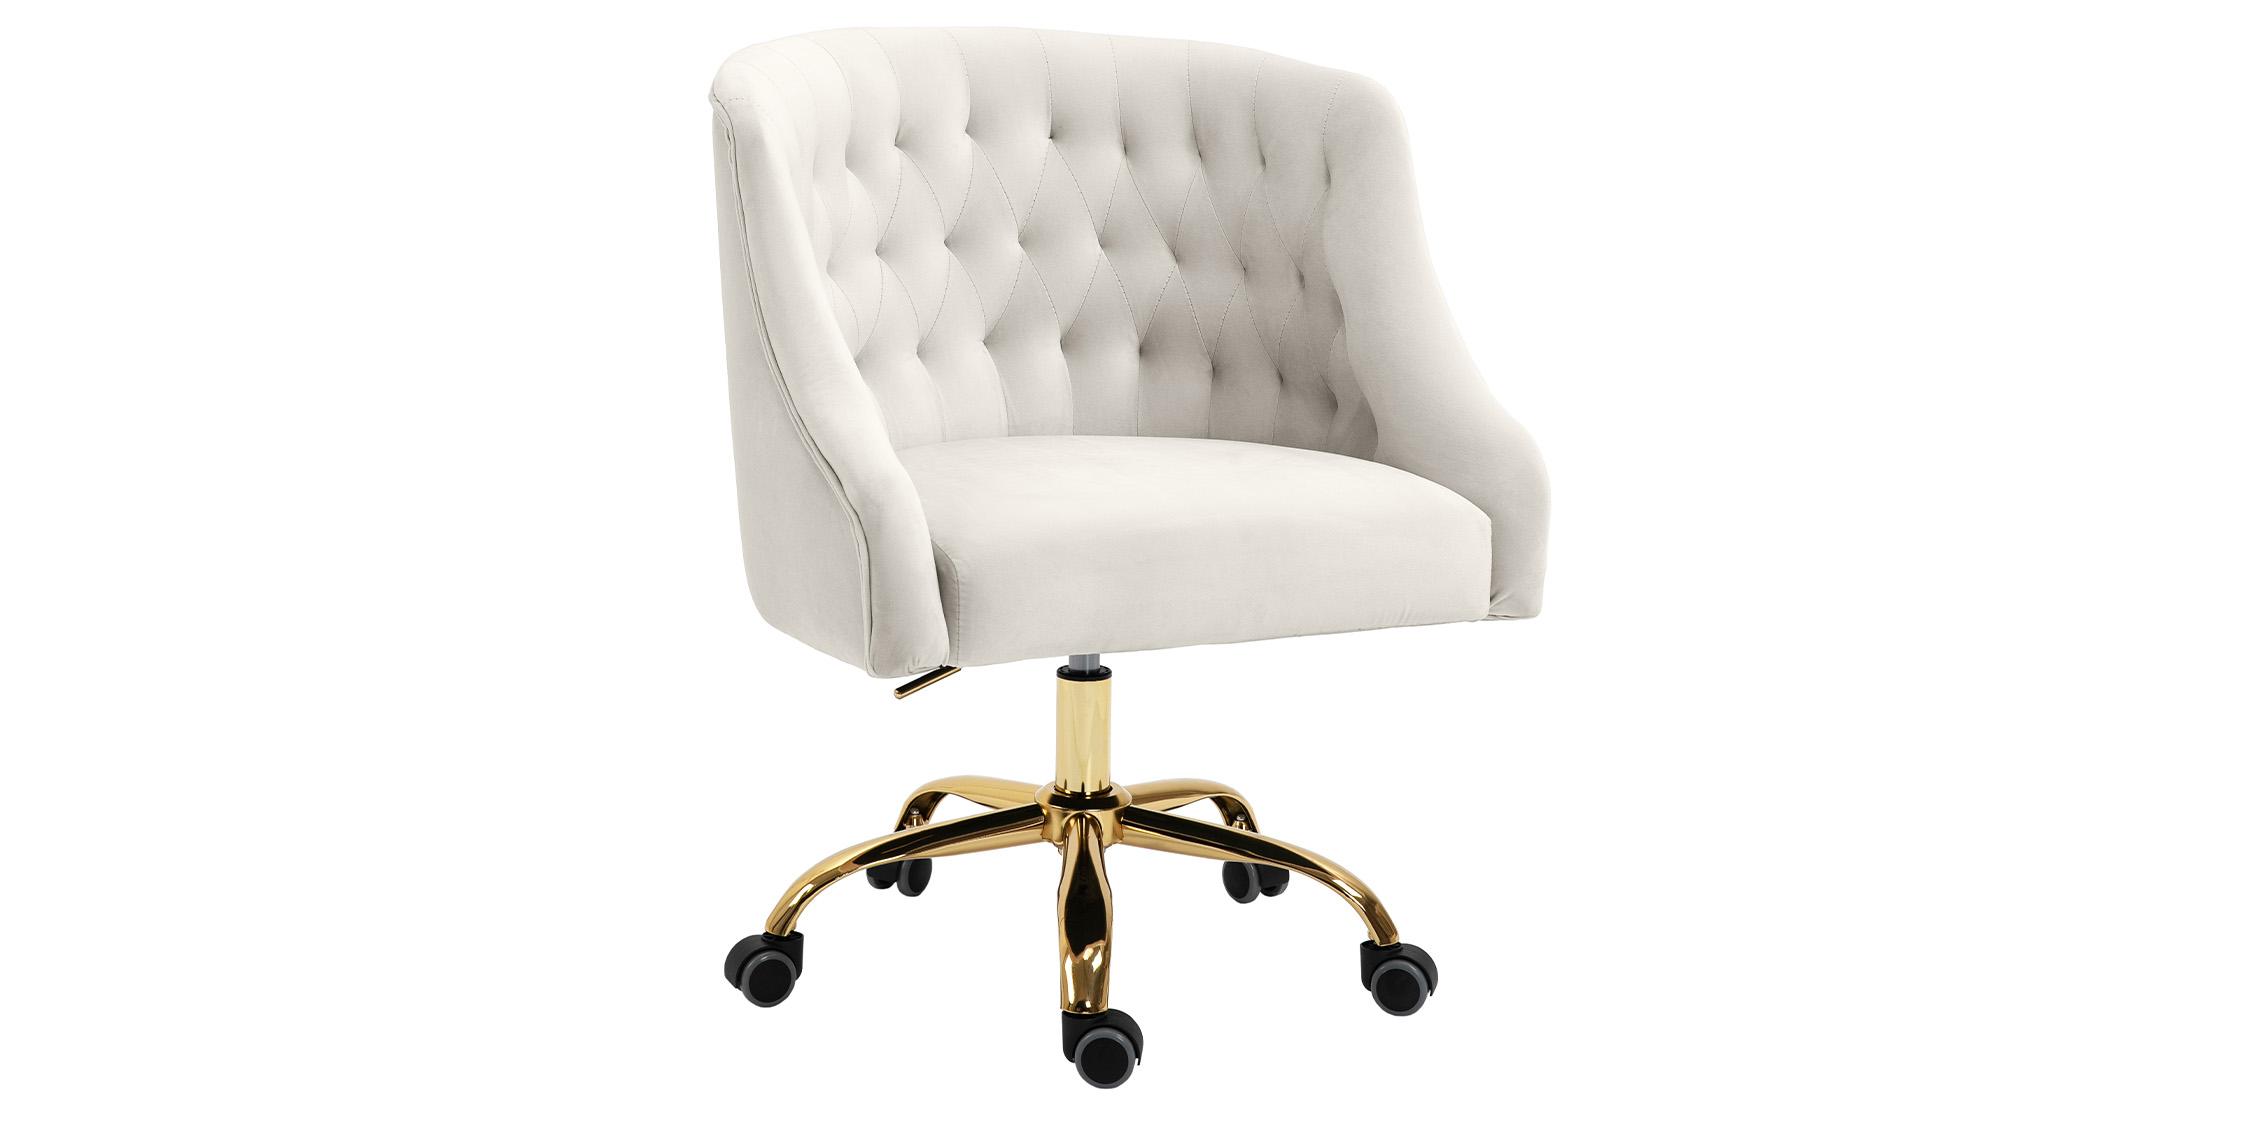 Contemporary, Modern Office Chair ARDEN 161Cream 161Cream in Cream Fabric